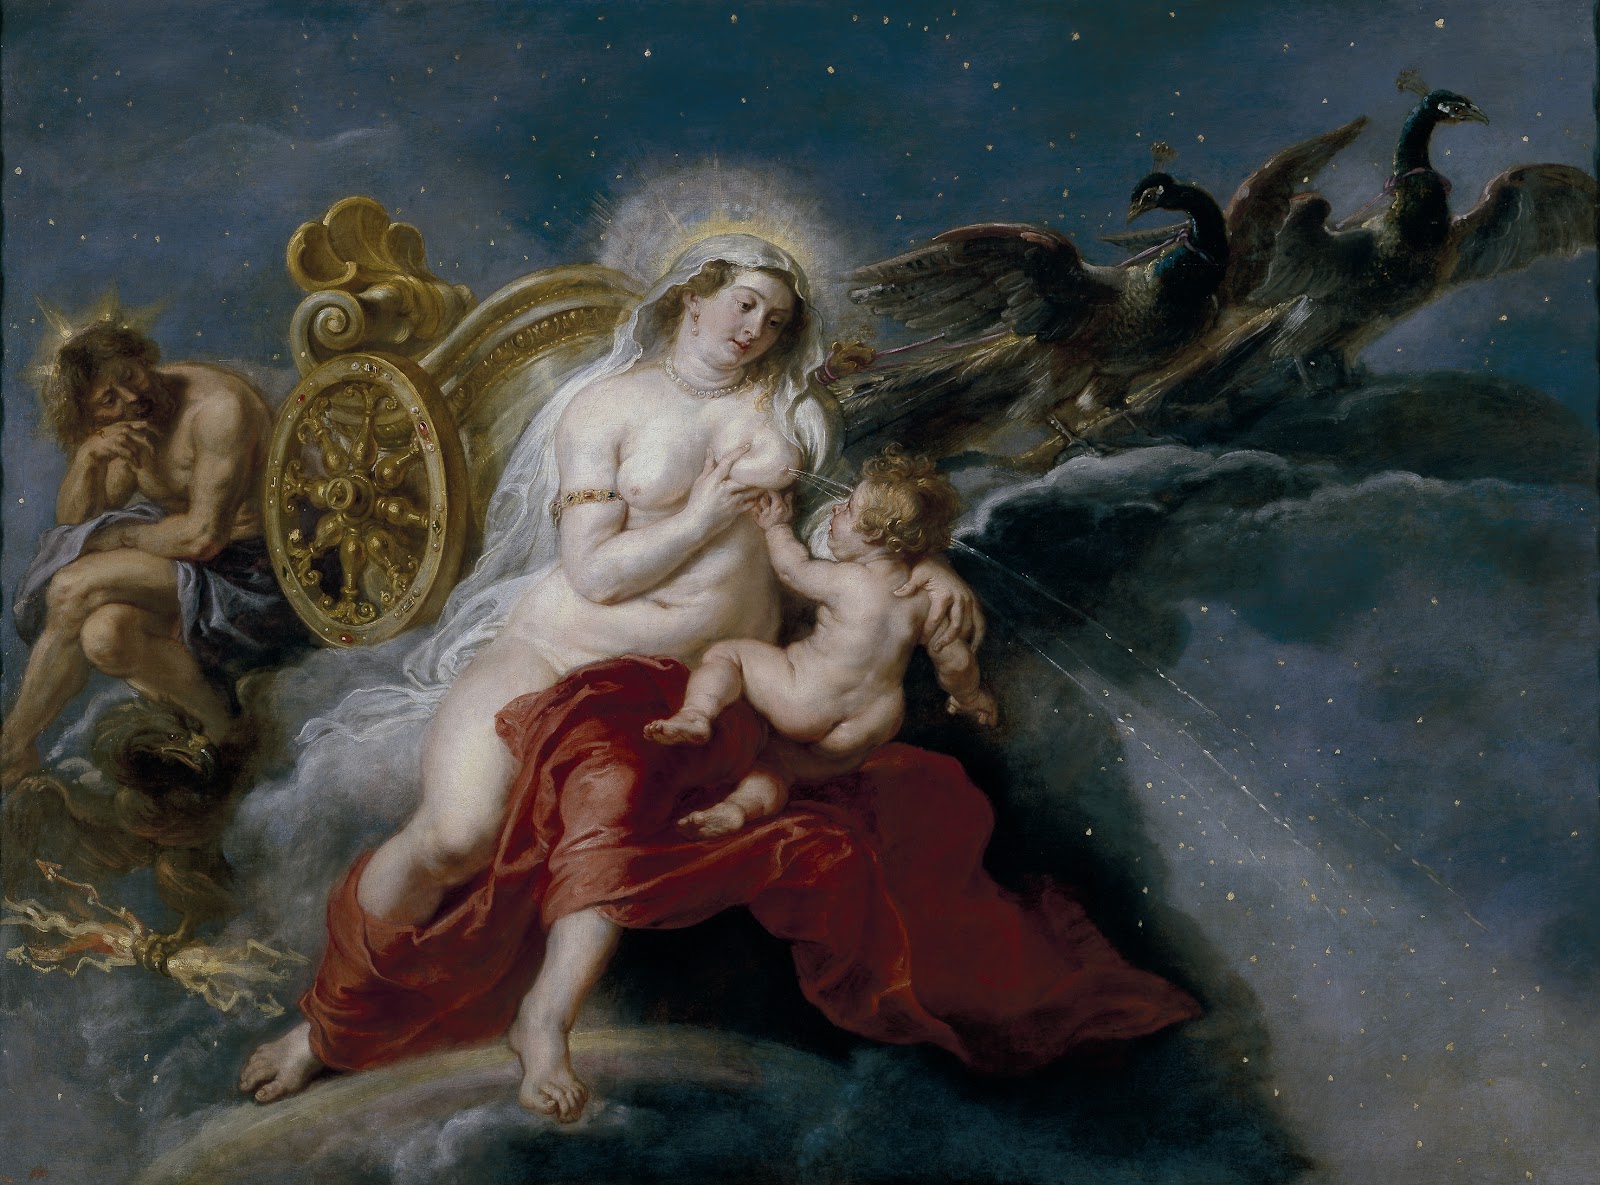 Peter Paul Rubens.  The Birth of the Milky Way, c. 1636-37